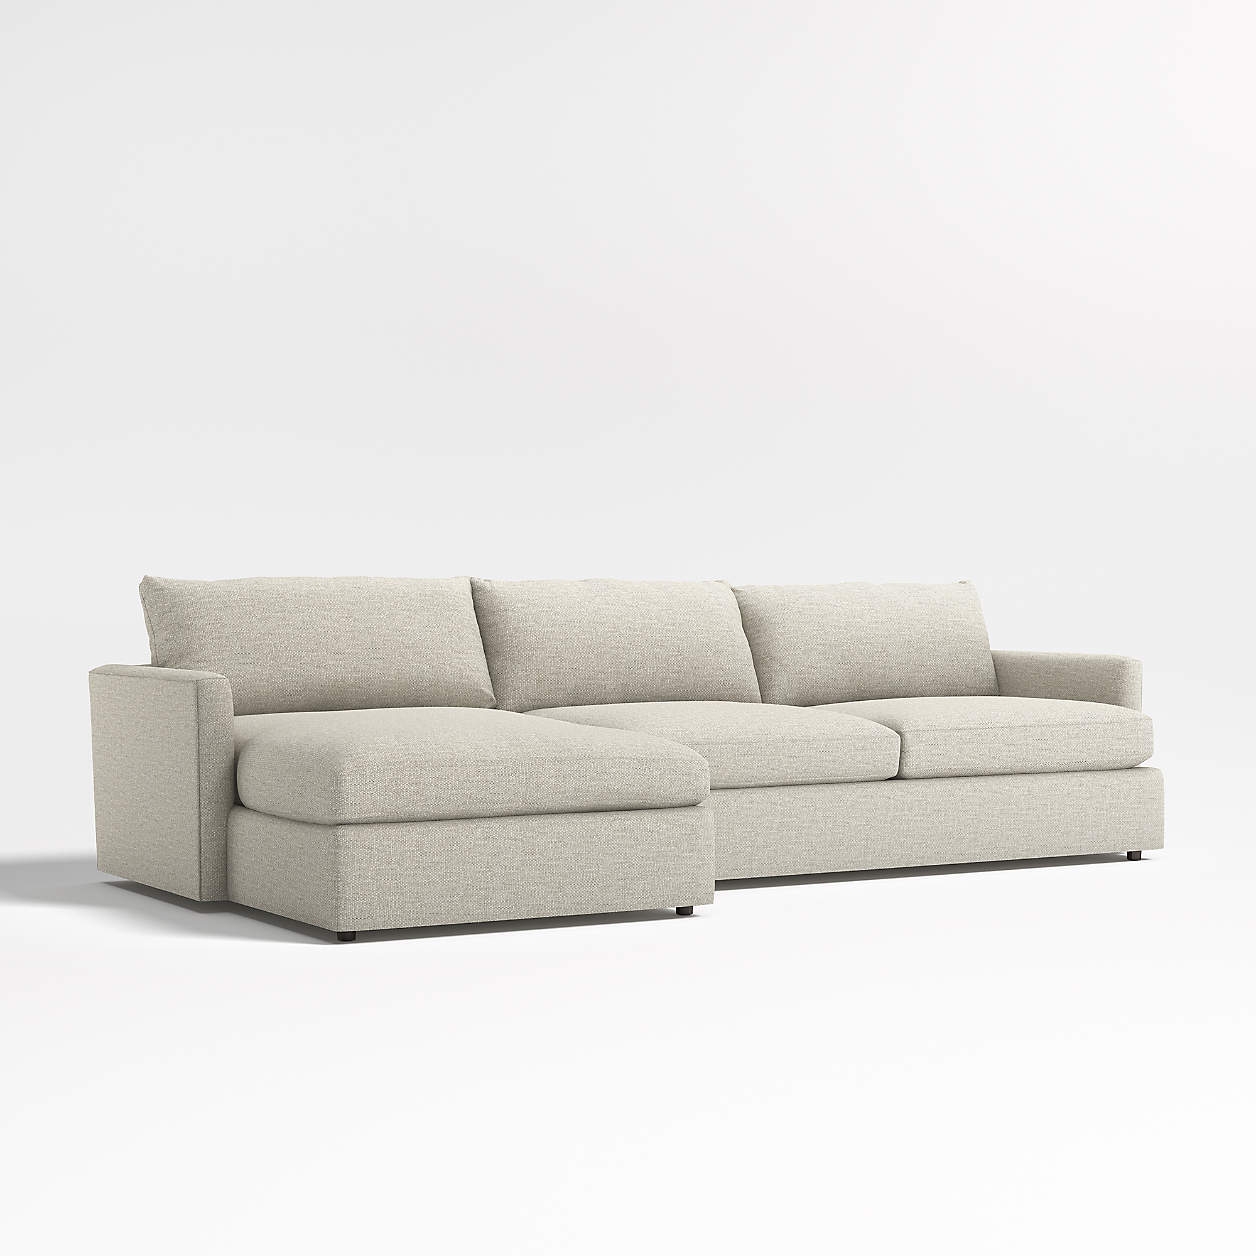 Lounge Deep 2-Piece Sectional Sofa - Taft Cement - Image 1